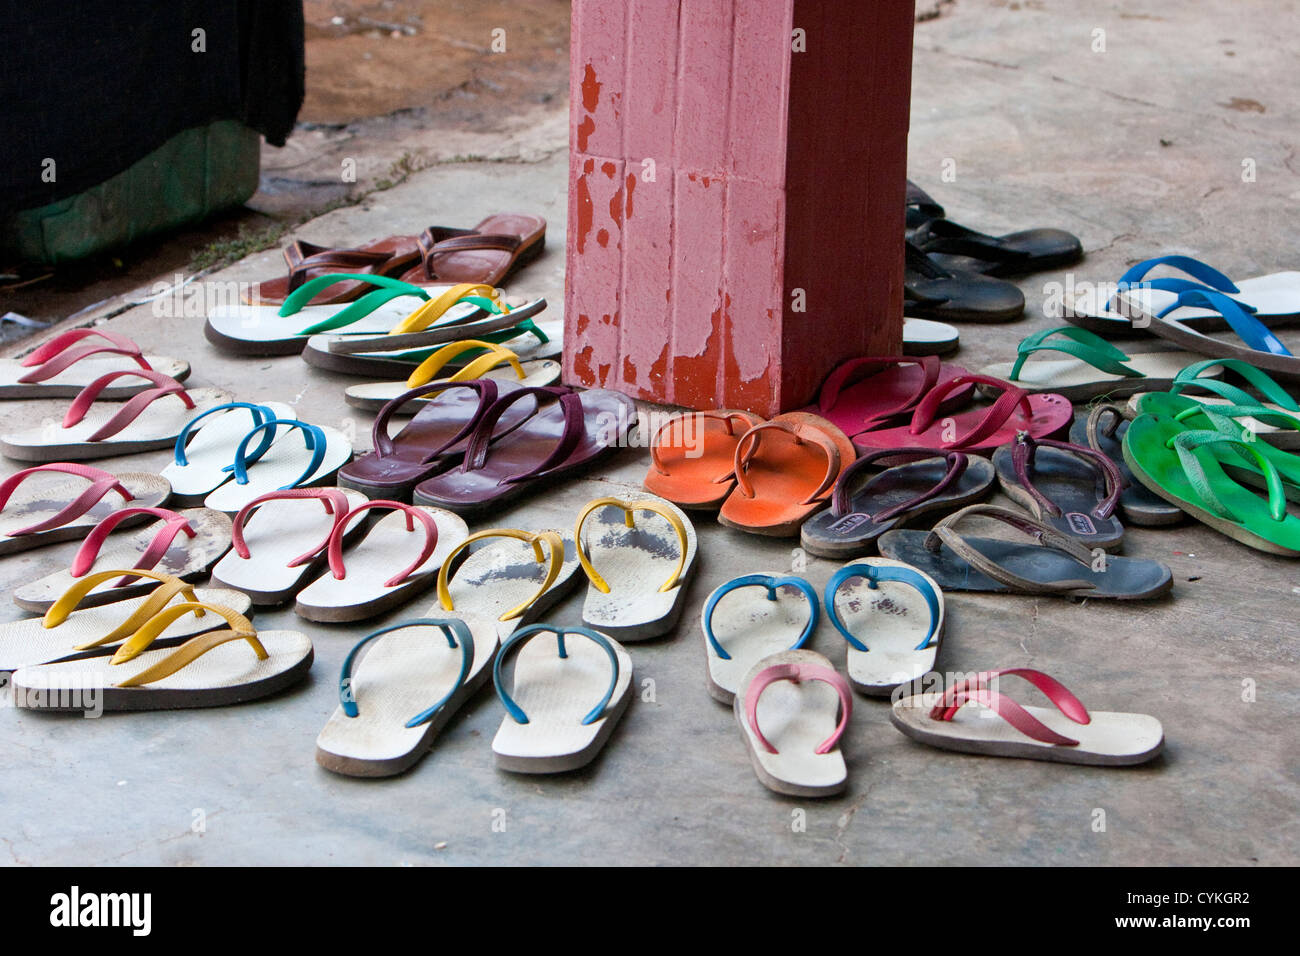 Myanmar, Burma. Sandals, Flip-Flops, outside Entrance to a Buddhist ...